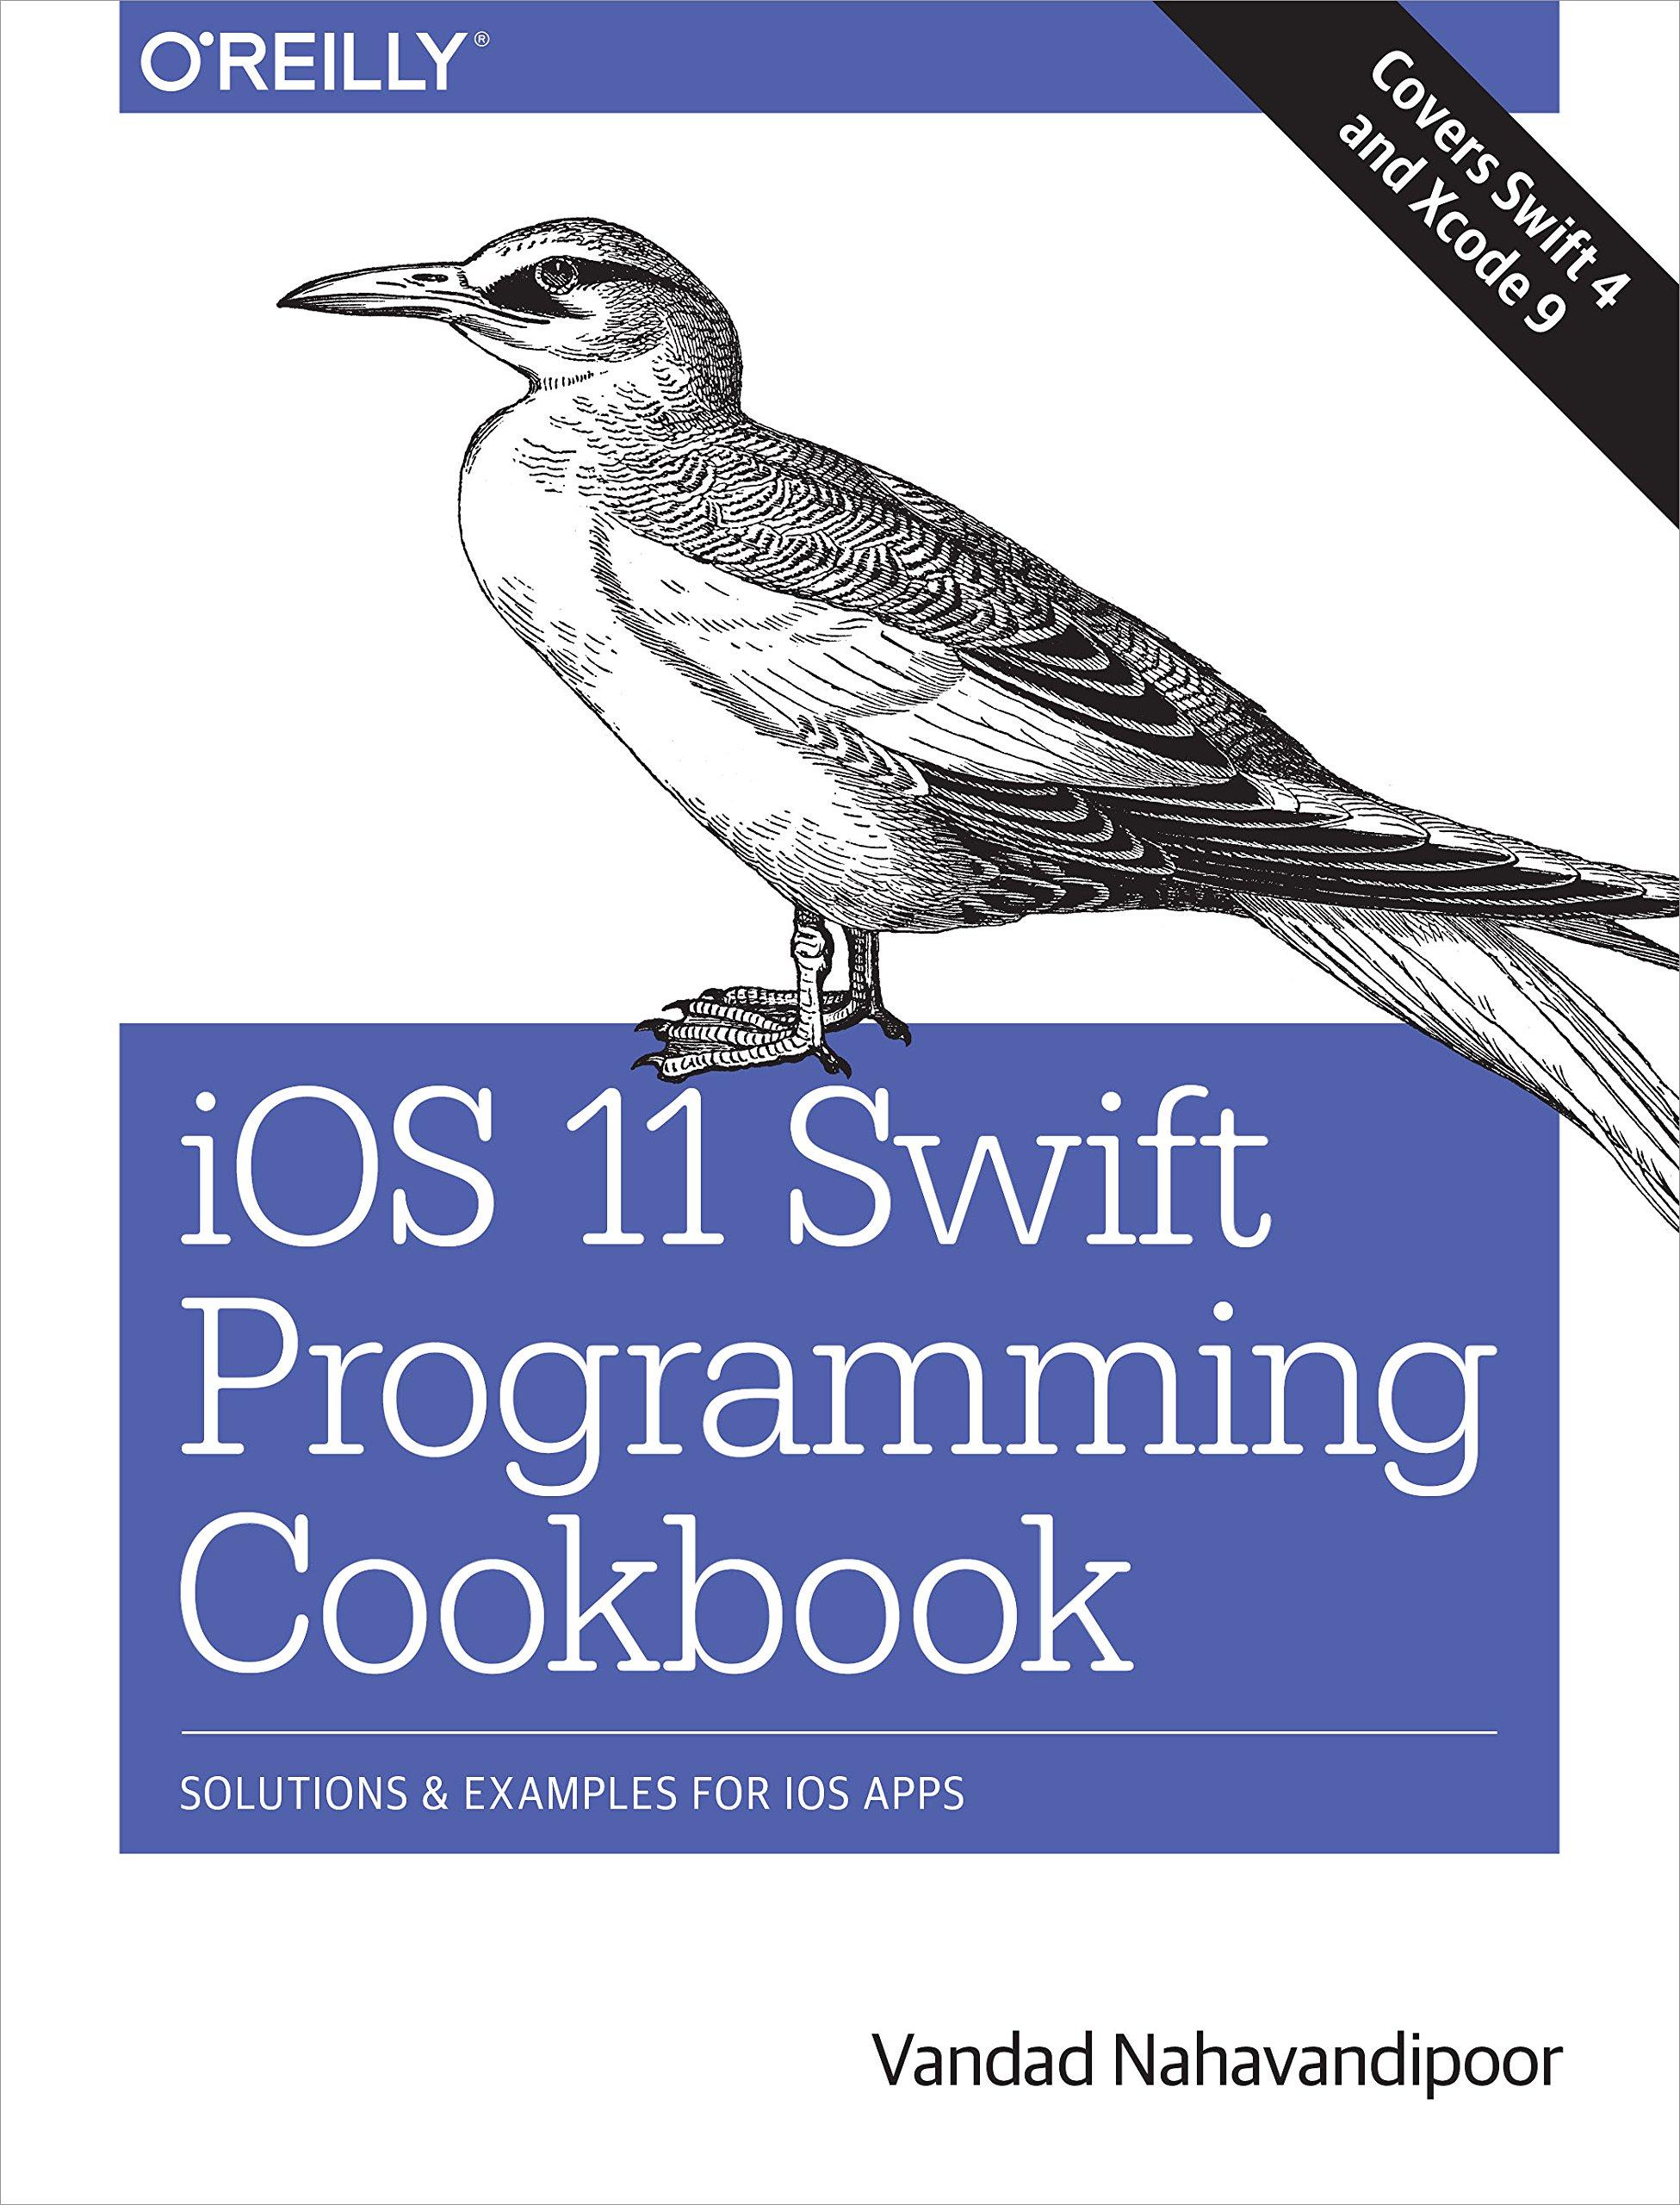 ios 11 swift programming cookbook solutions and examples for ios apps 1st edition vandad nahavandipoor